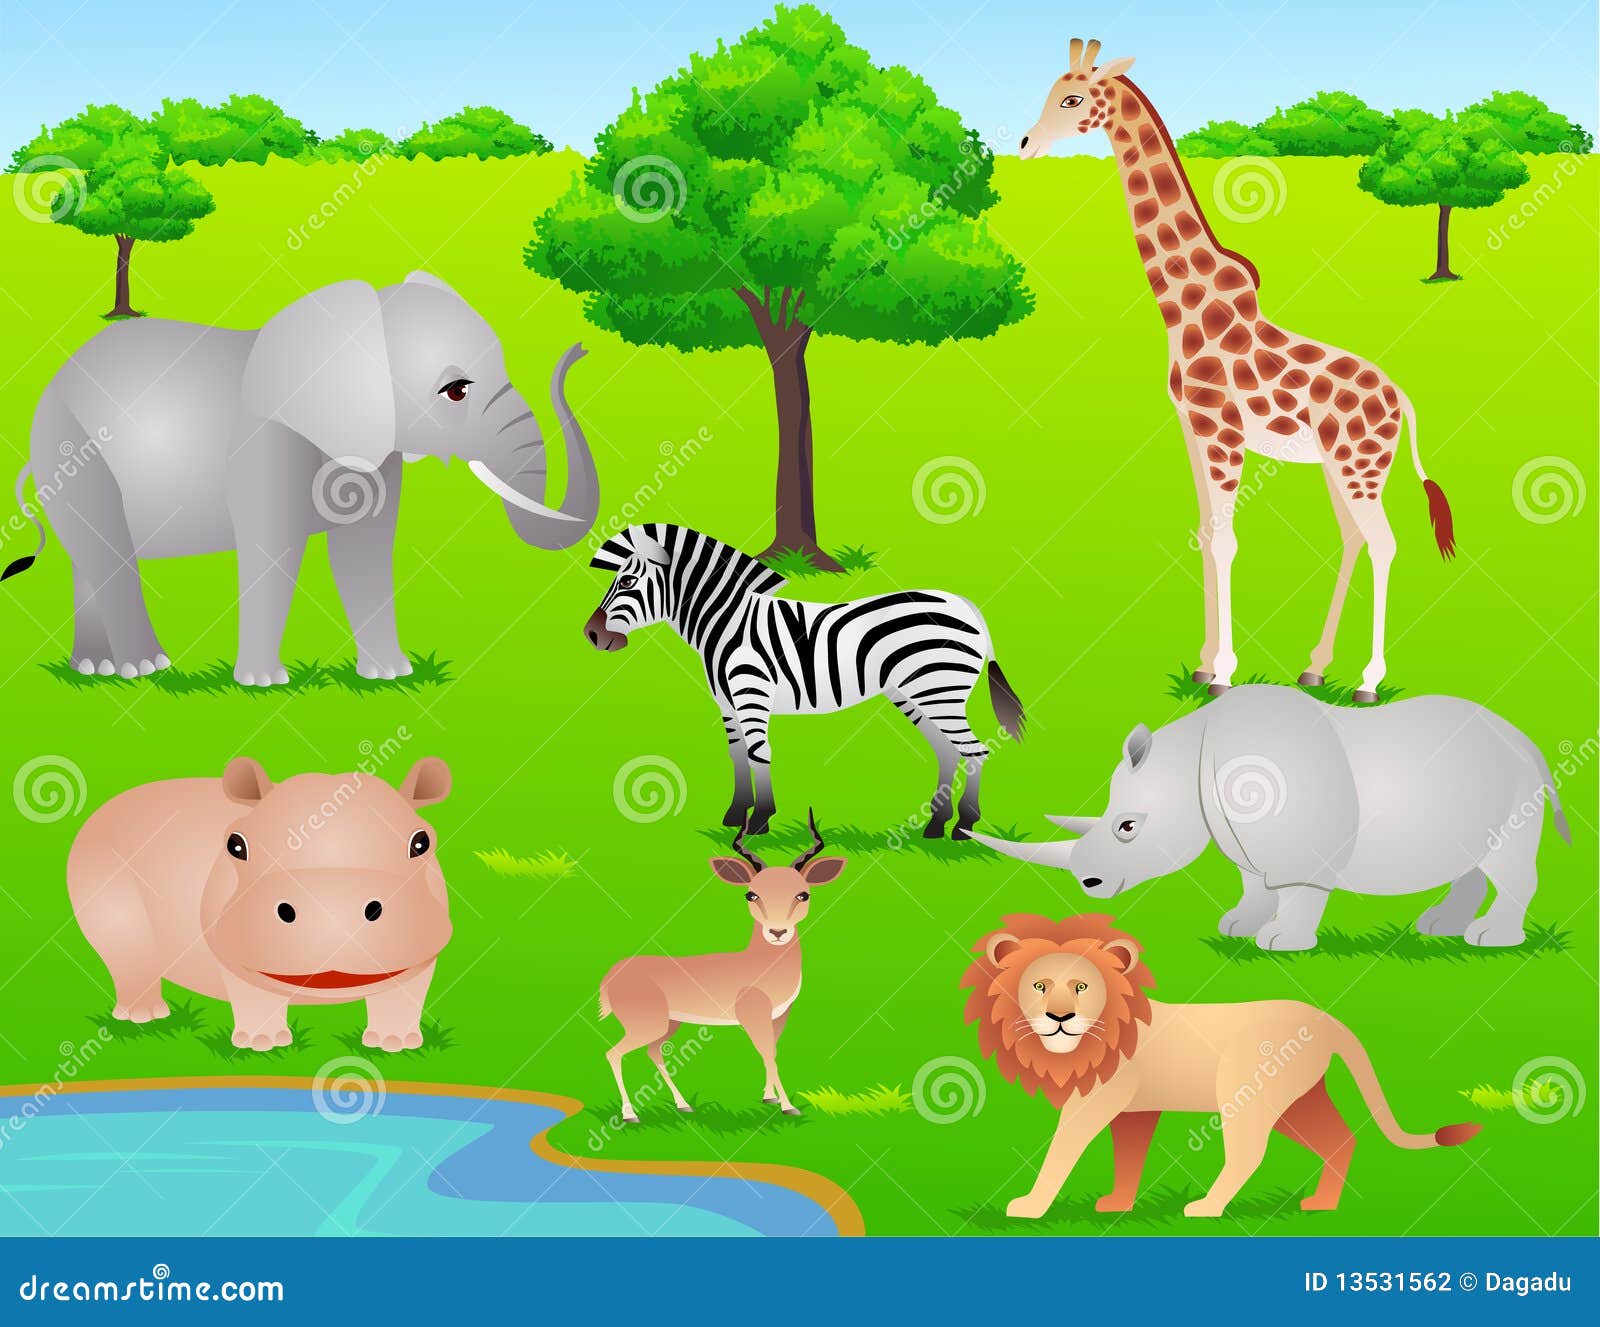 Safari animal cartoon stock vector. Illustration of impala - 13531562